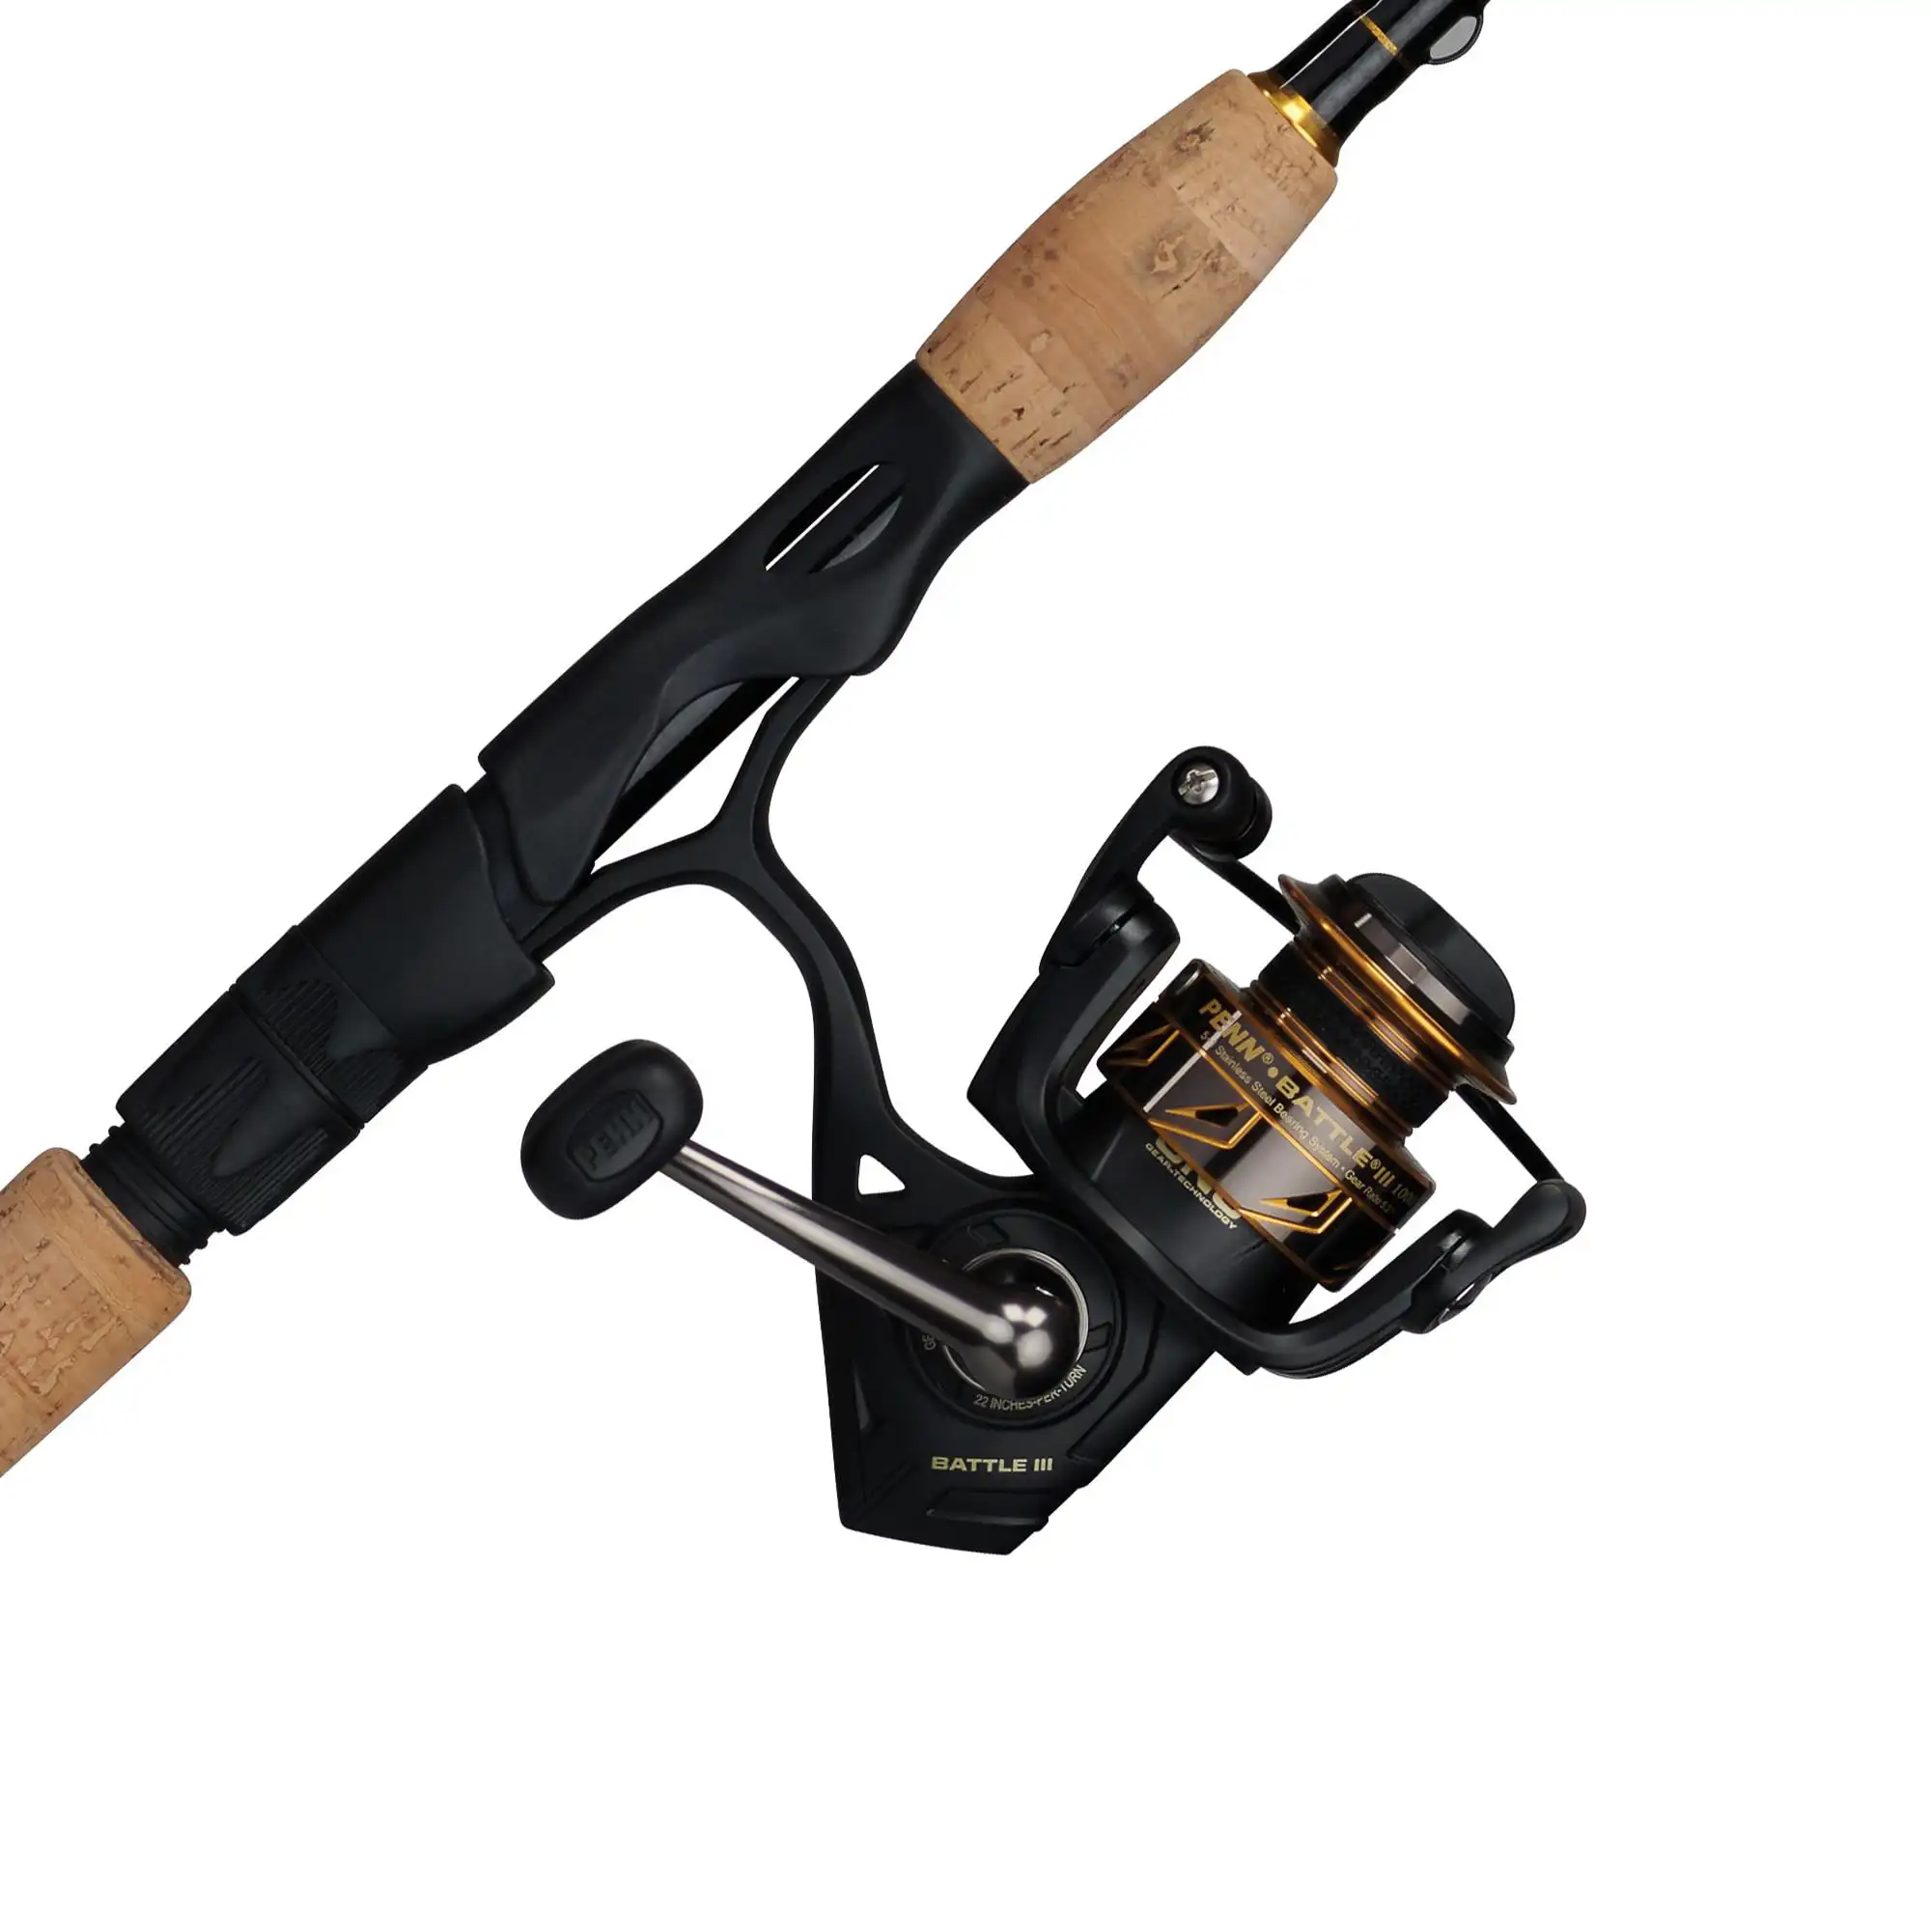 

6’6” Battle III Fishing Rod and Reel Spinning Combo